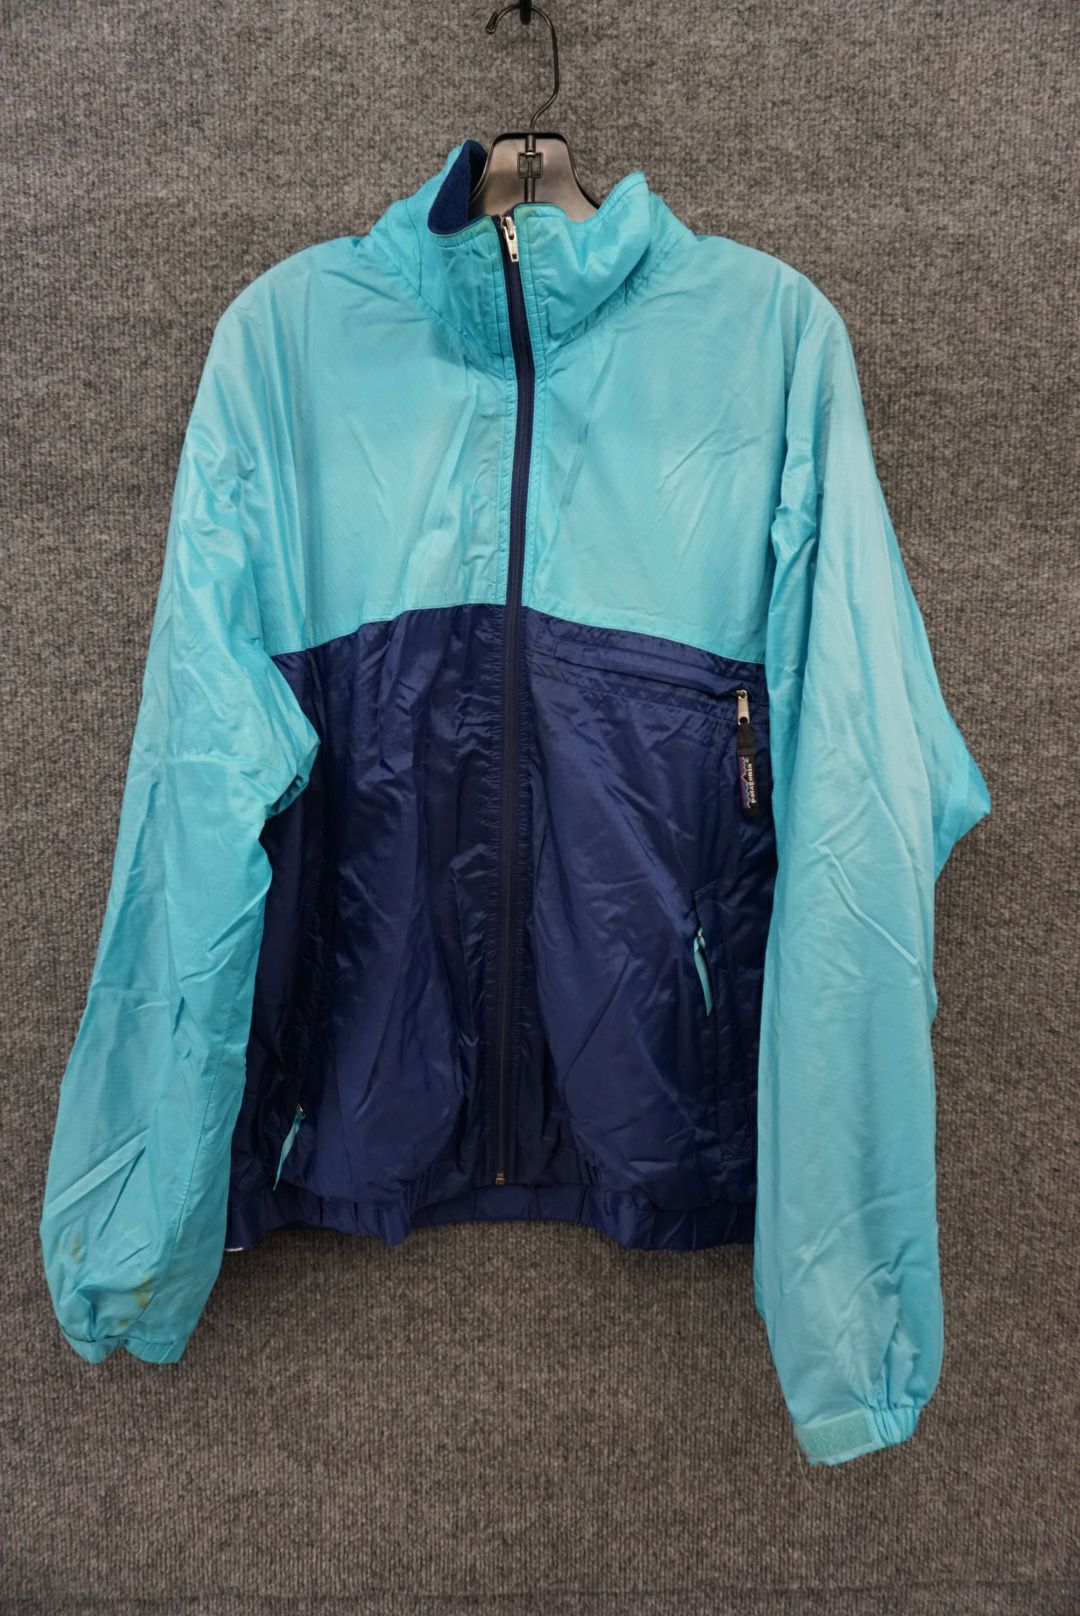 Patagonia Size Large Men's Synthetic Jacket